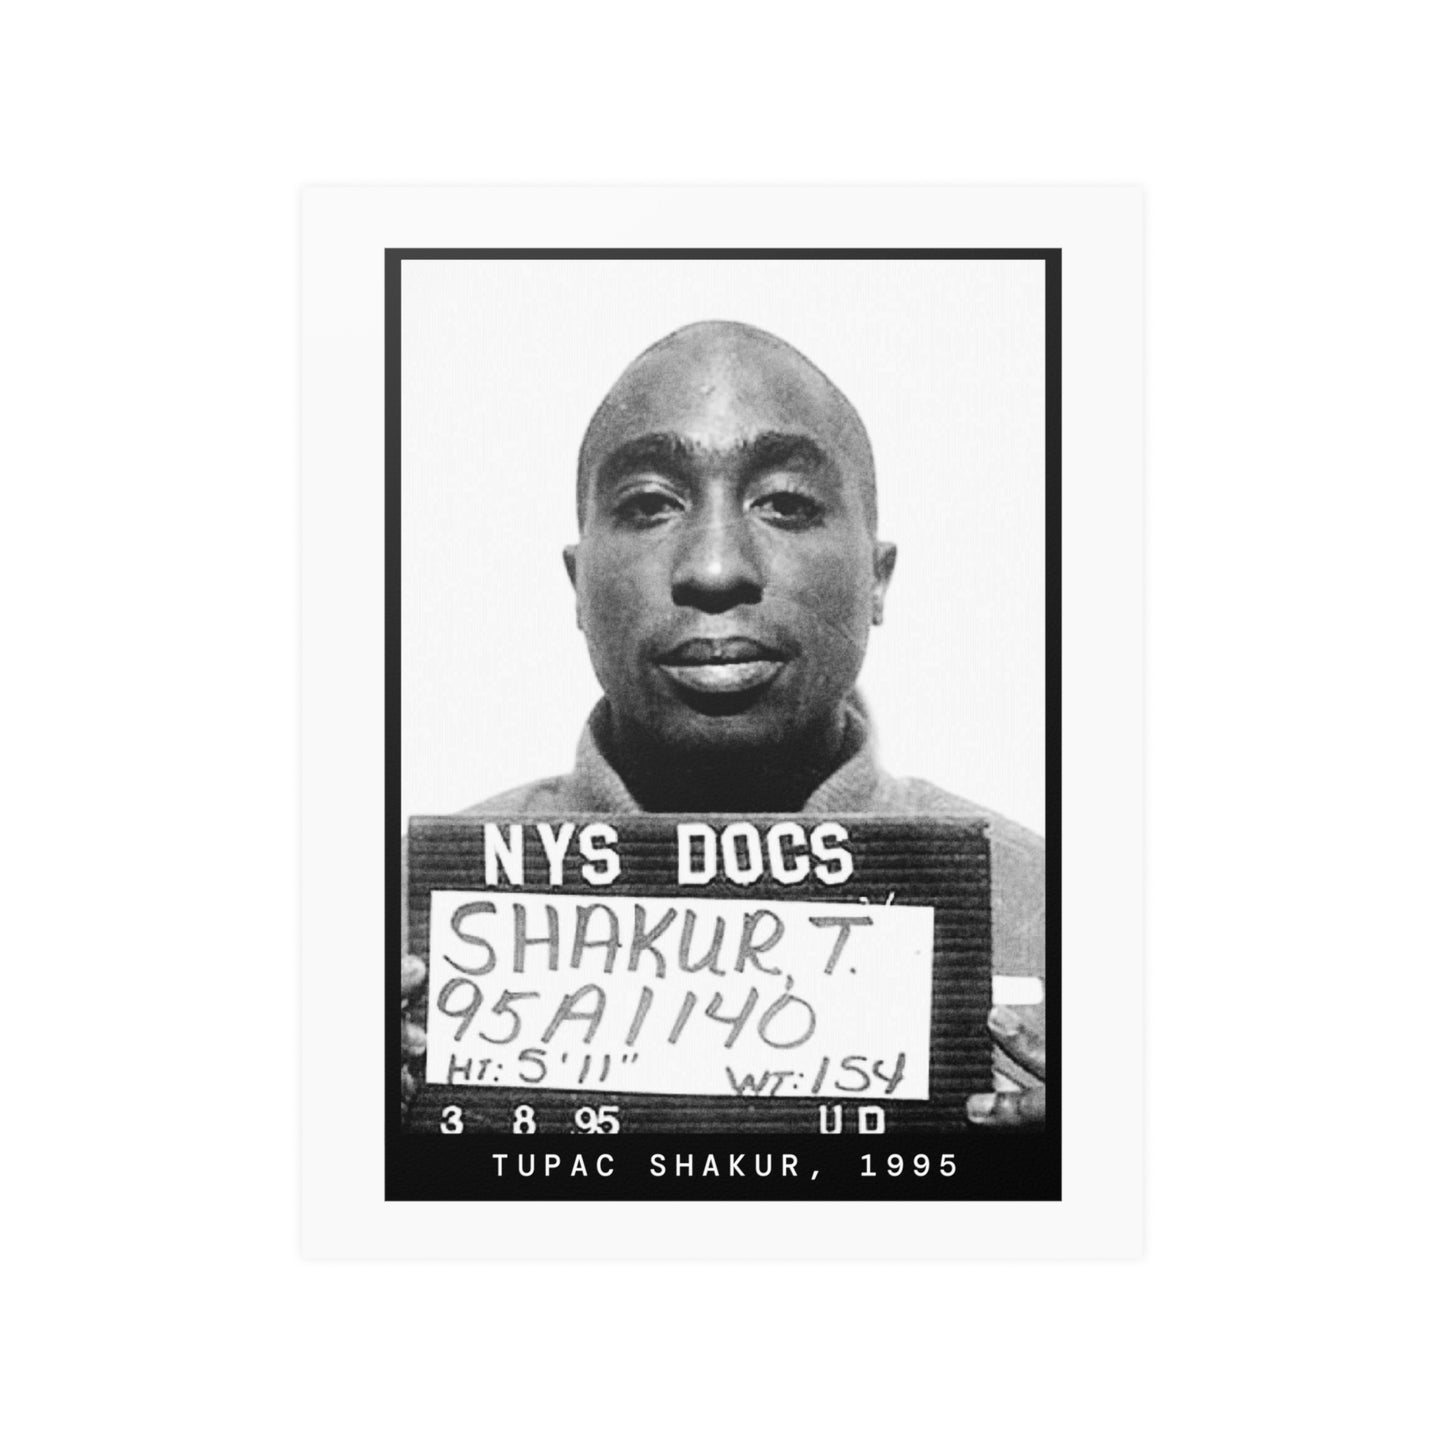 Tupac Shakur, 1995 Rapper Mugshot Poster